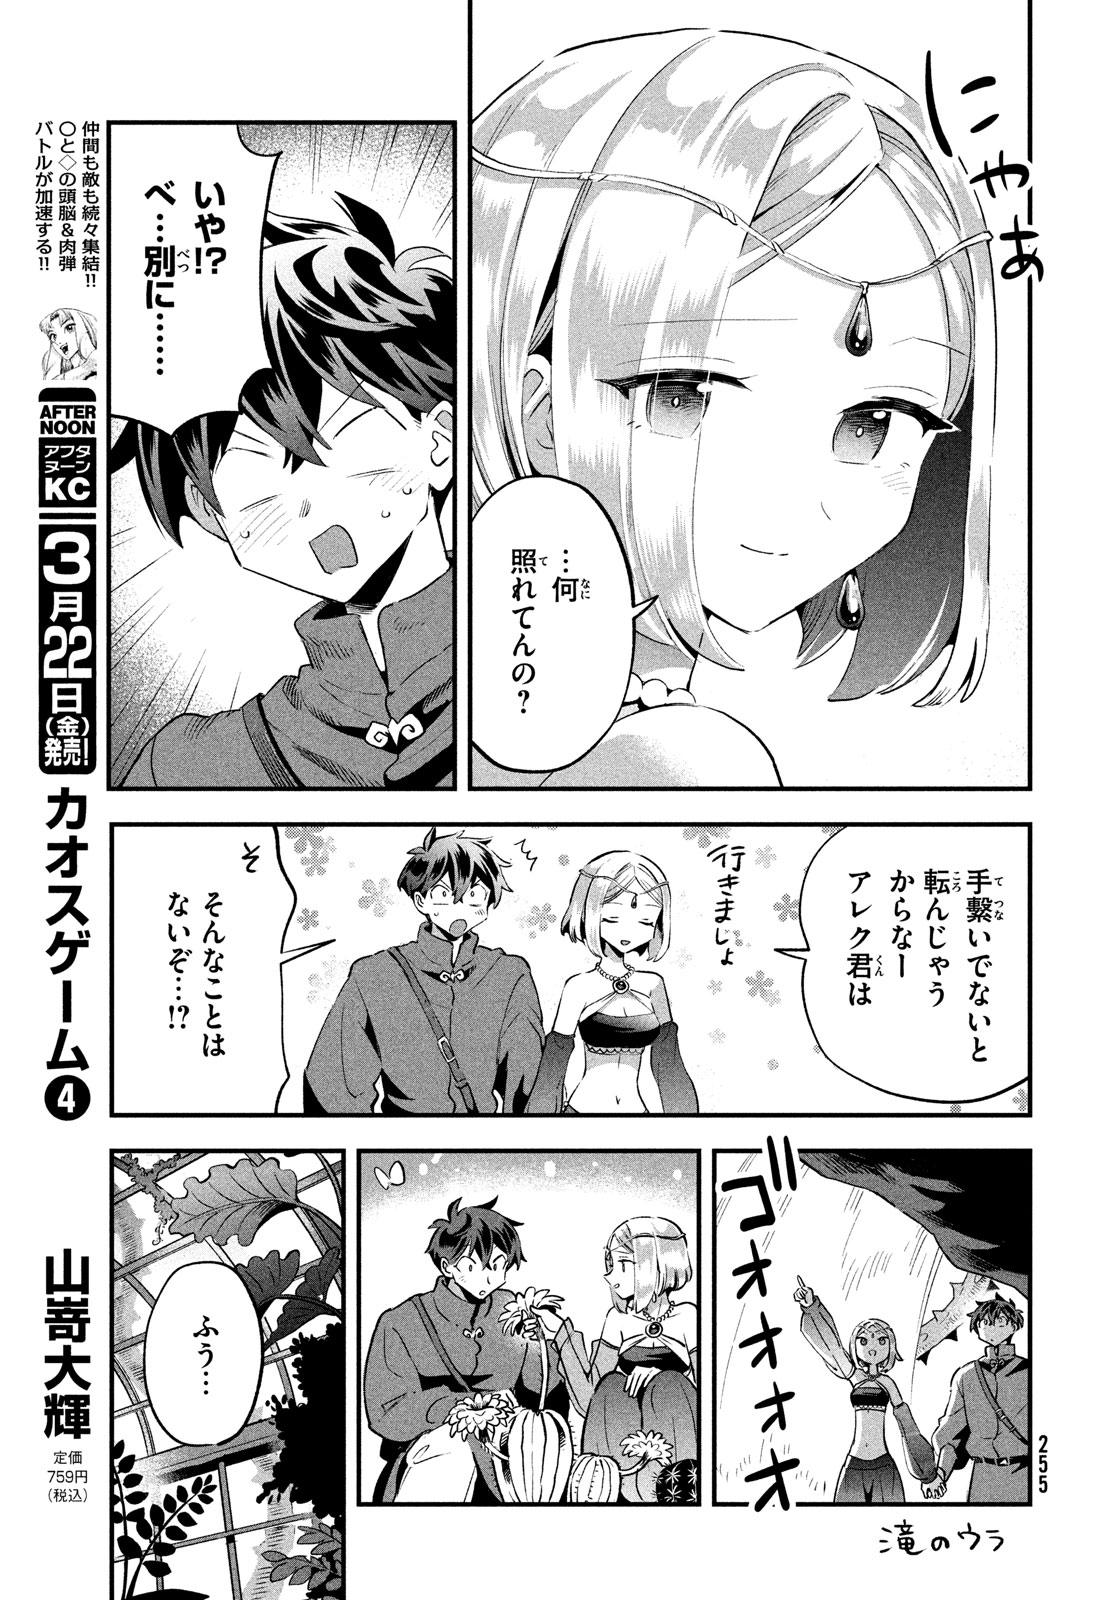 7-nin no Nemuri Hime - Chapter 35 - Page 13